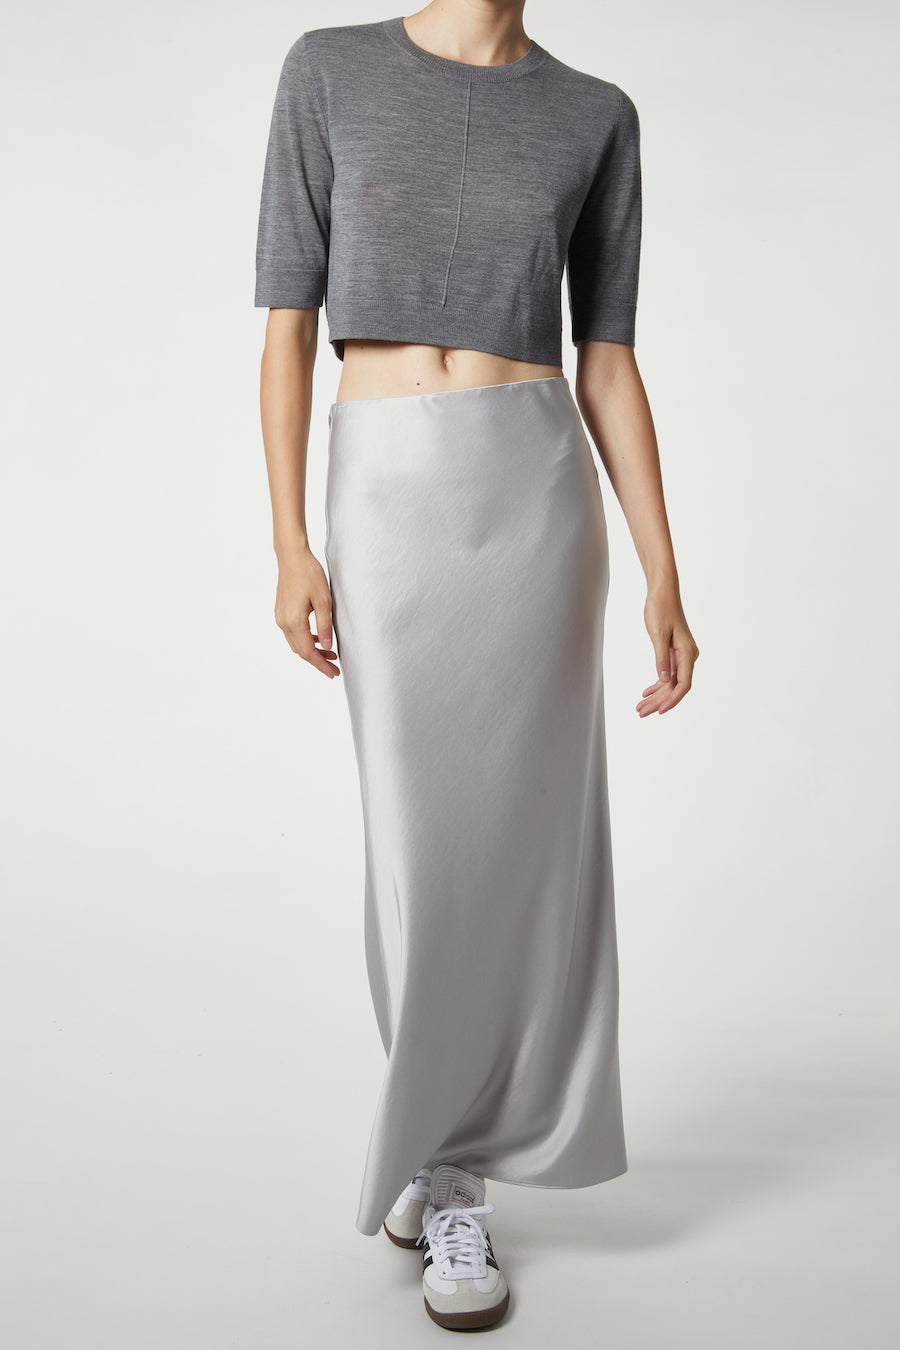 Saint Art New York - Talia Charmeuse Maxi Skirt in Silver Grey